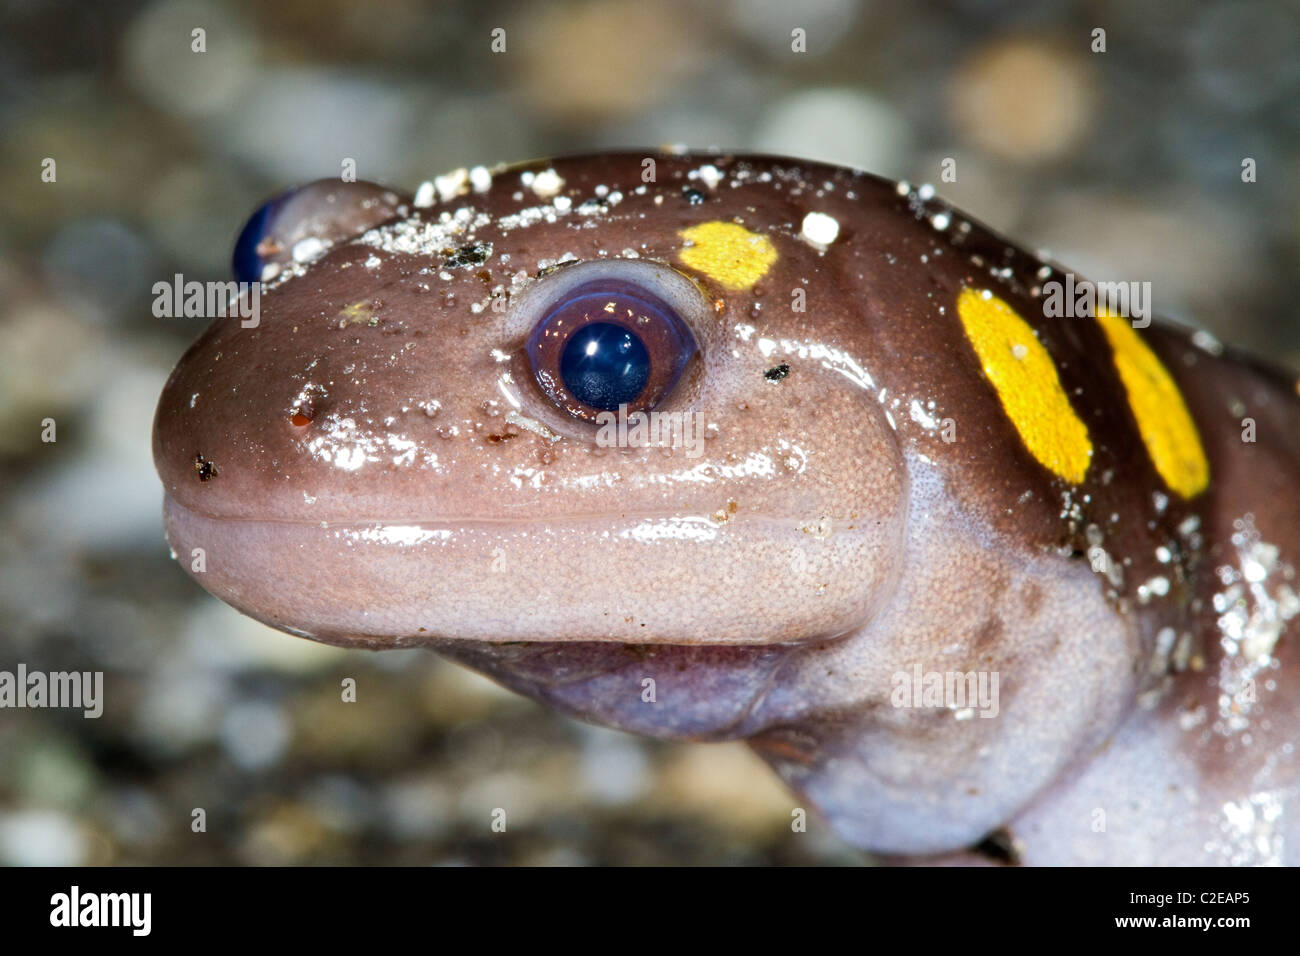 Salamandra pezzata, (Ambystoma maculatum), Giallo salamandra pezzata, New Hampshire, New England, STATI UNITI D'AMERICA wildlife closeup, vicino. Foto Stock